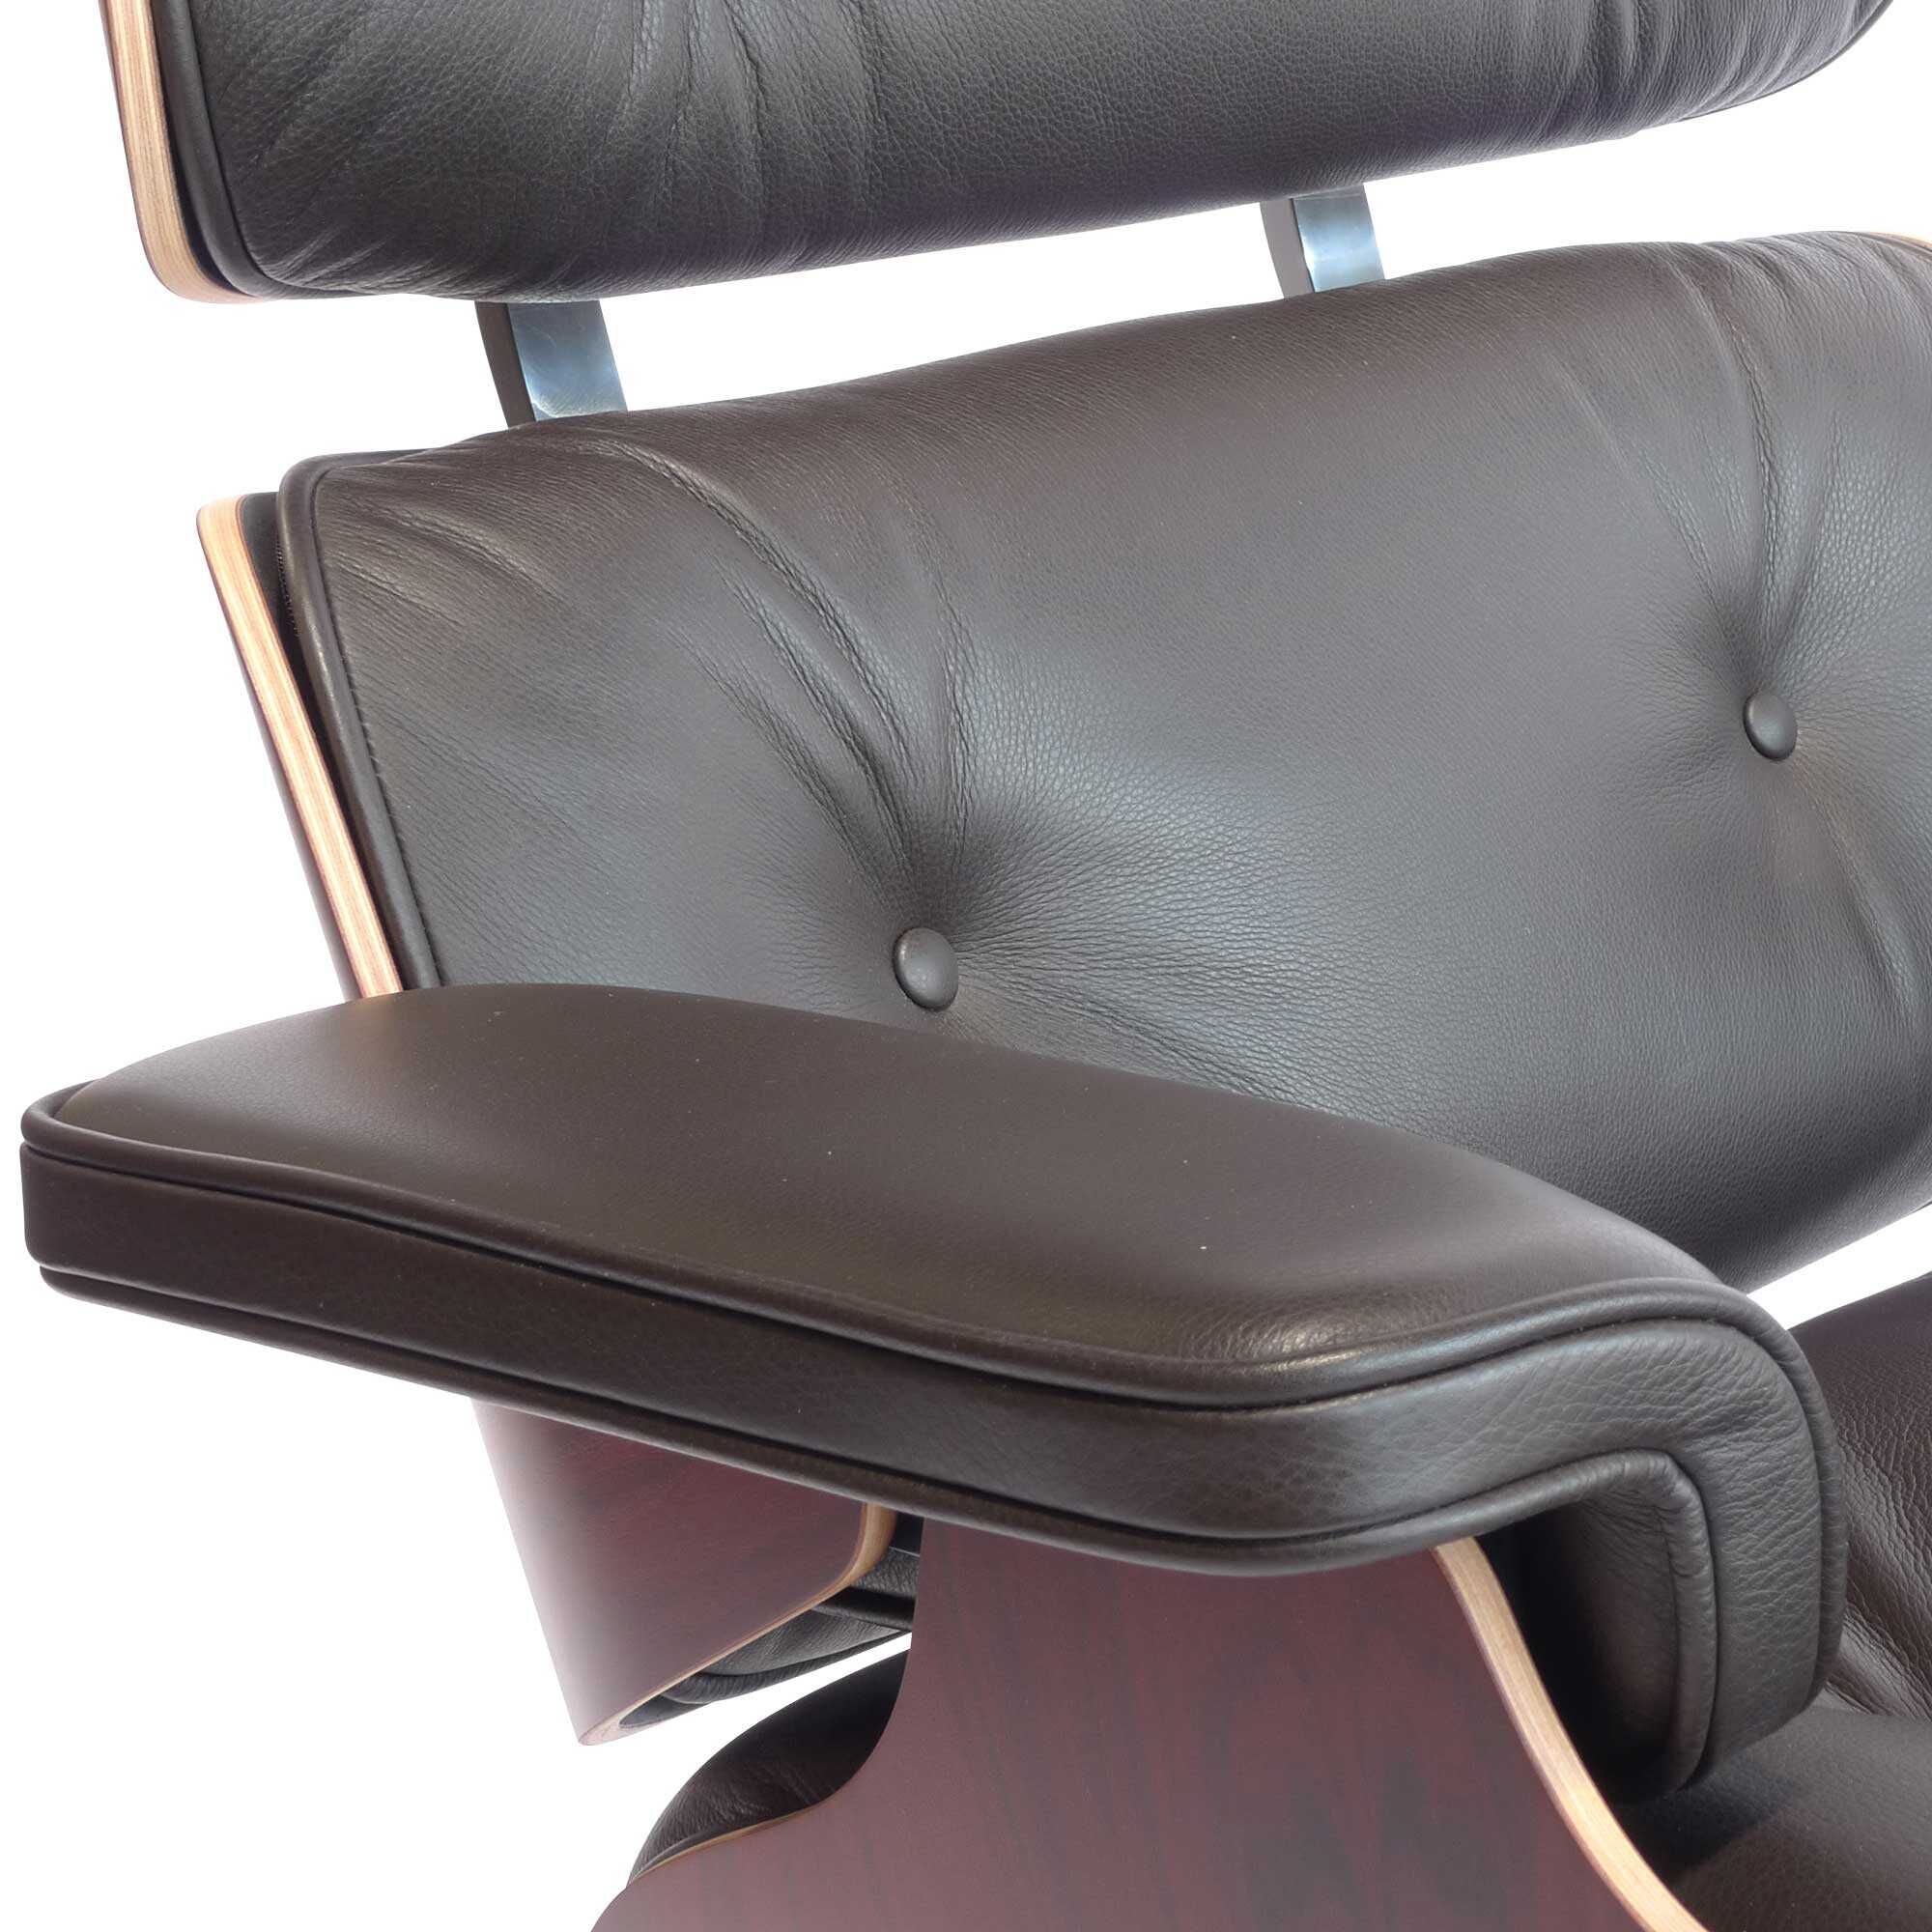 Sessel Eames Lounge Chair mit Ottoman Leder Braun Kirschbaum neue Maße Ausstellungsstück